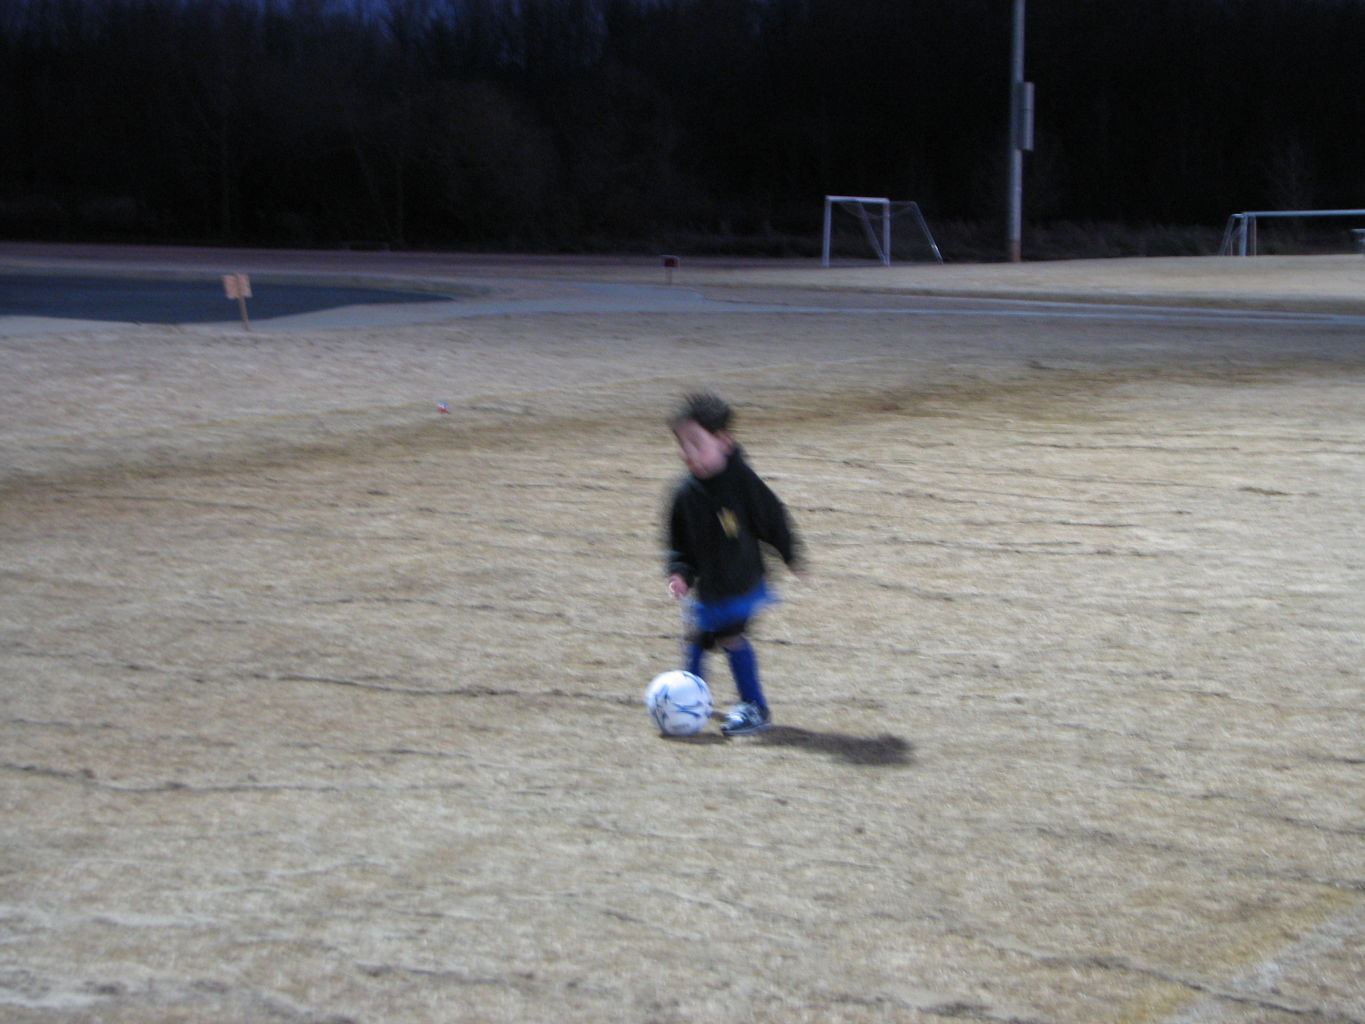 James Soccer Practice